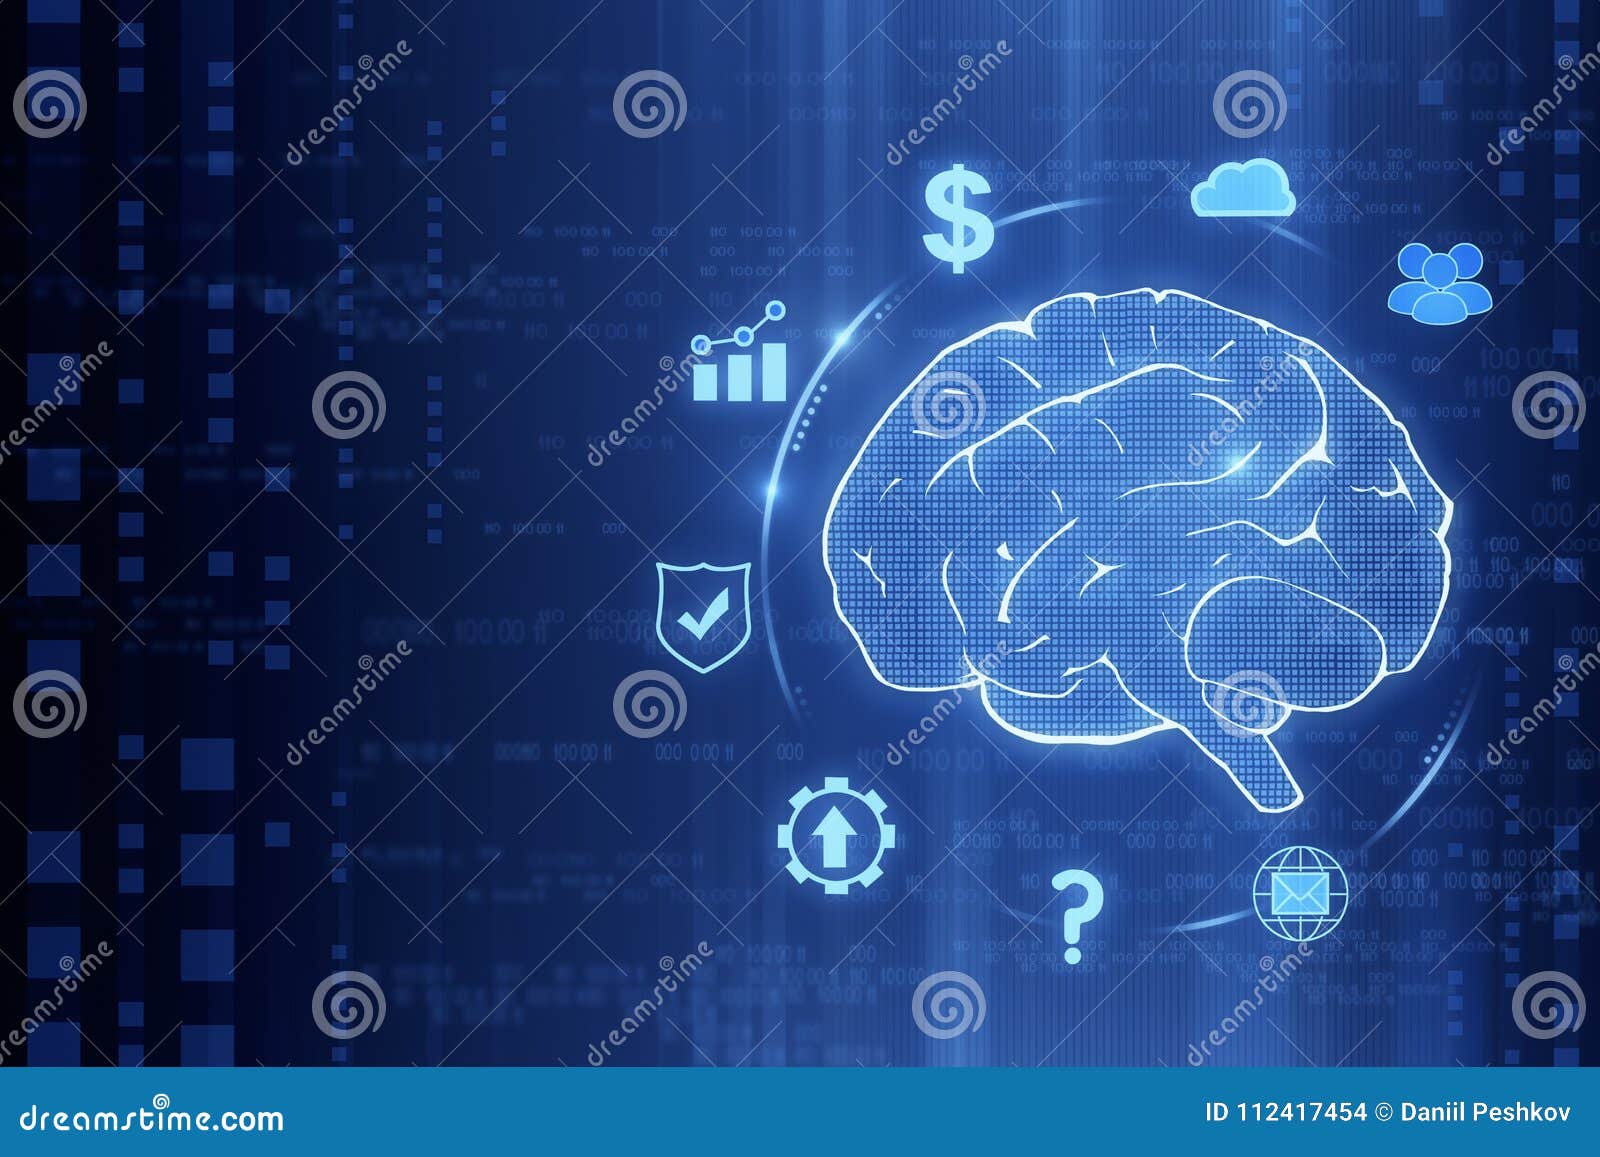 Creative Tech Brain Wallpaper Stock Illustration ...